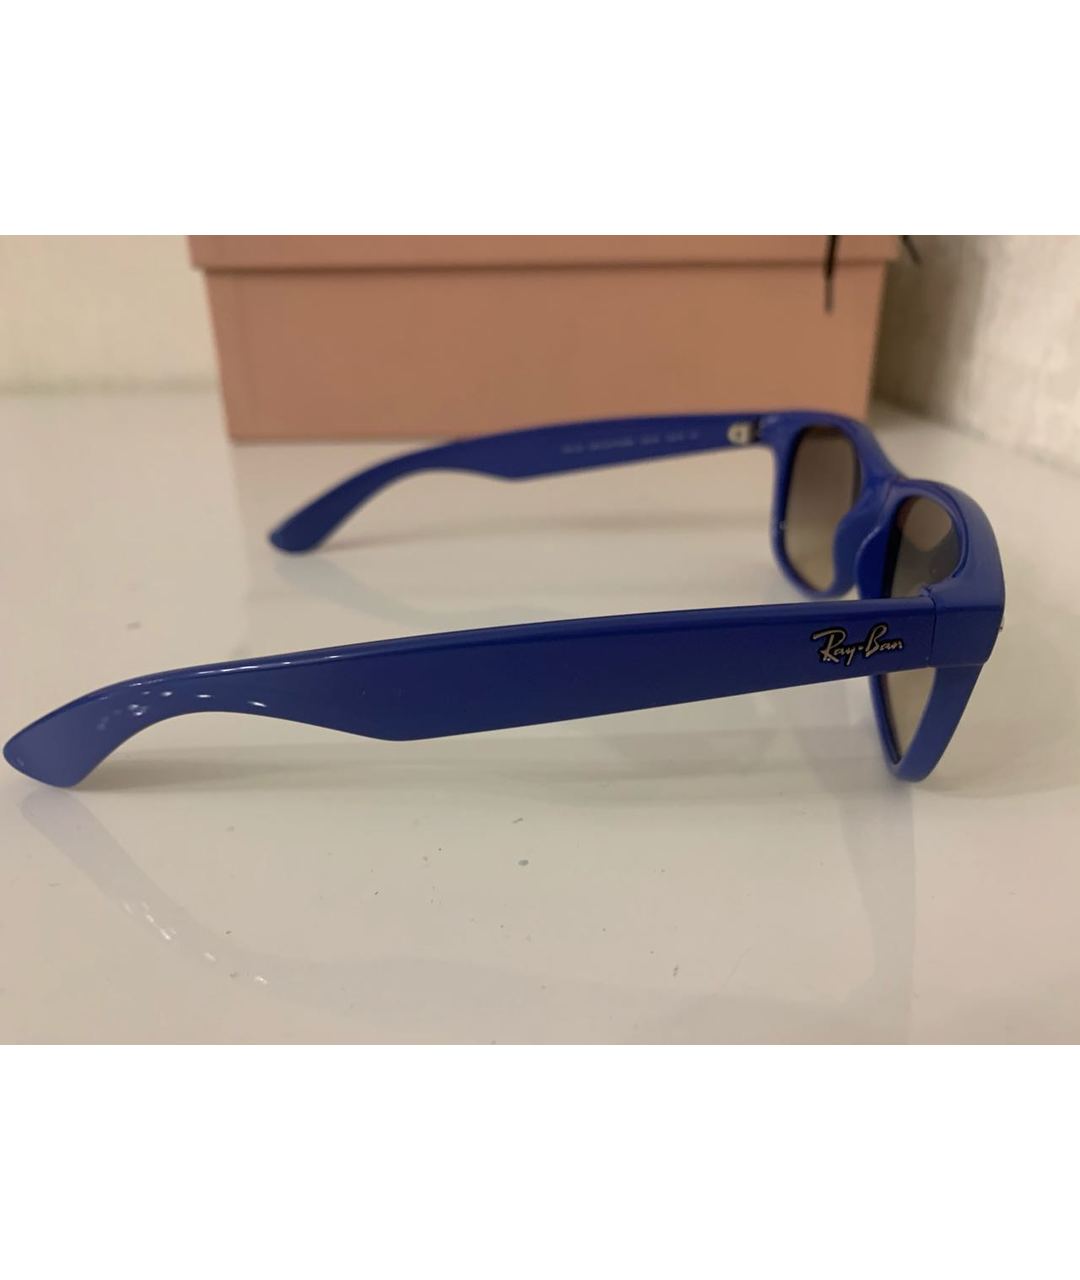 RAY BAN Синие пластиковые солнцезащитные очки, фото 2